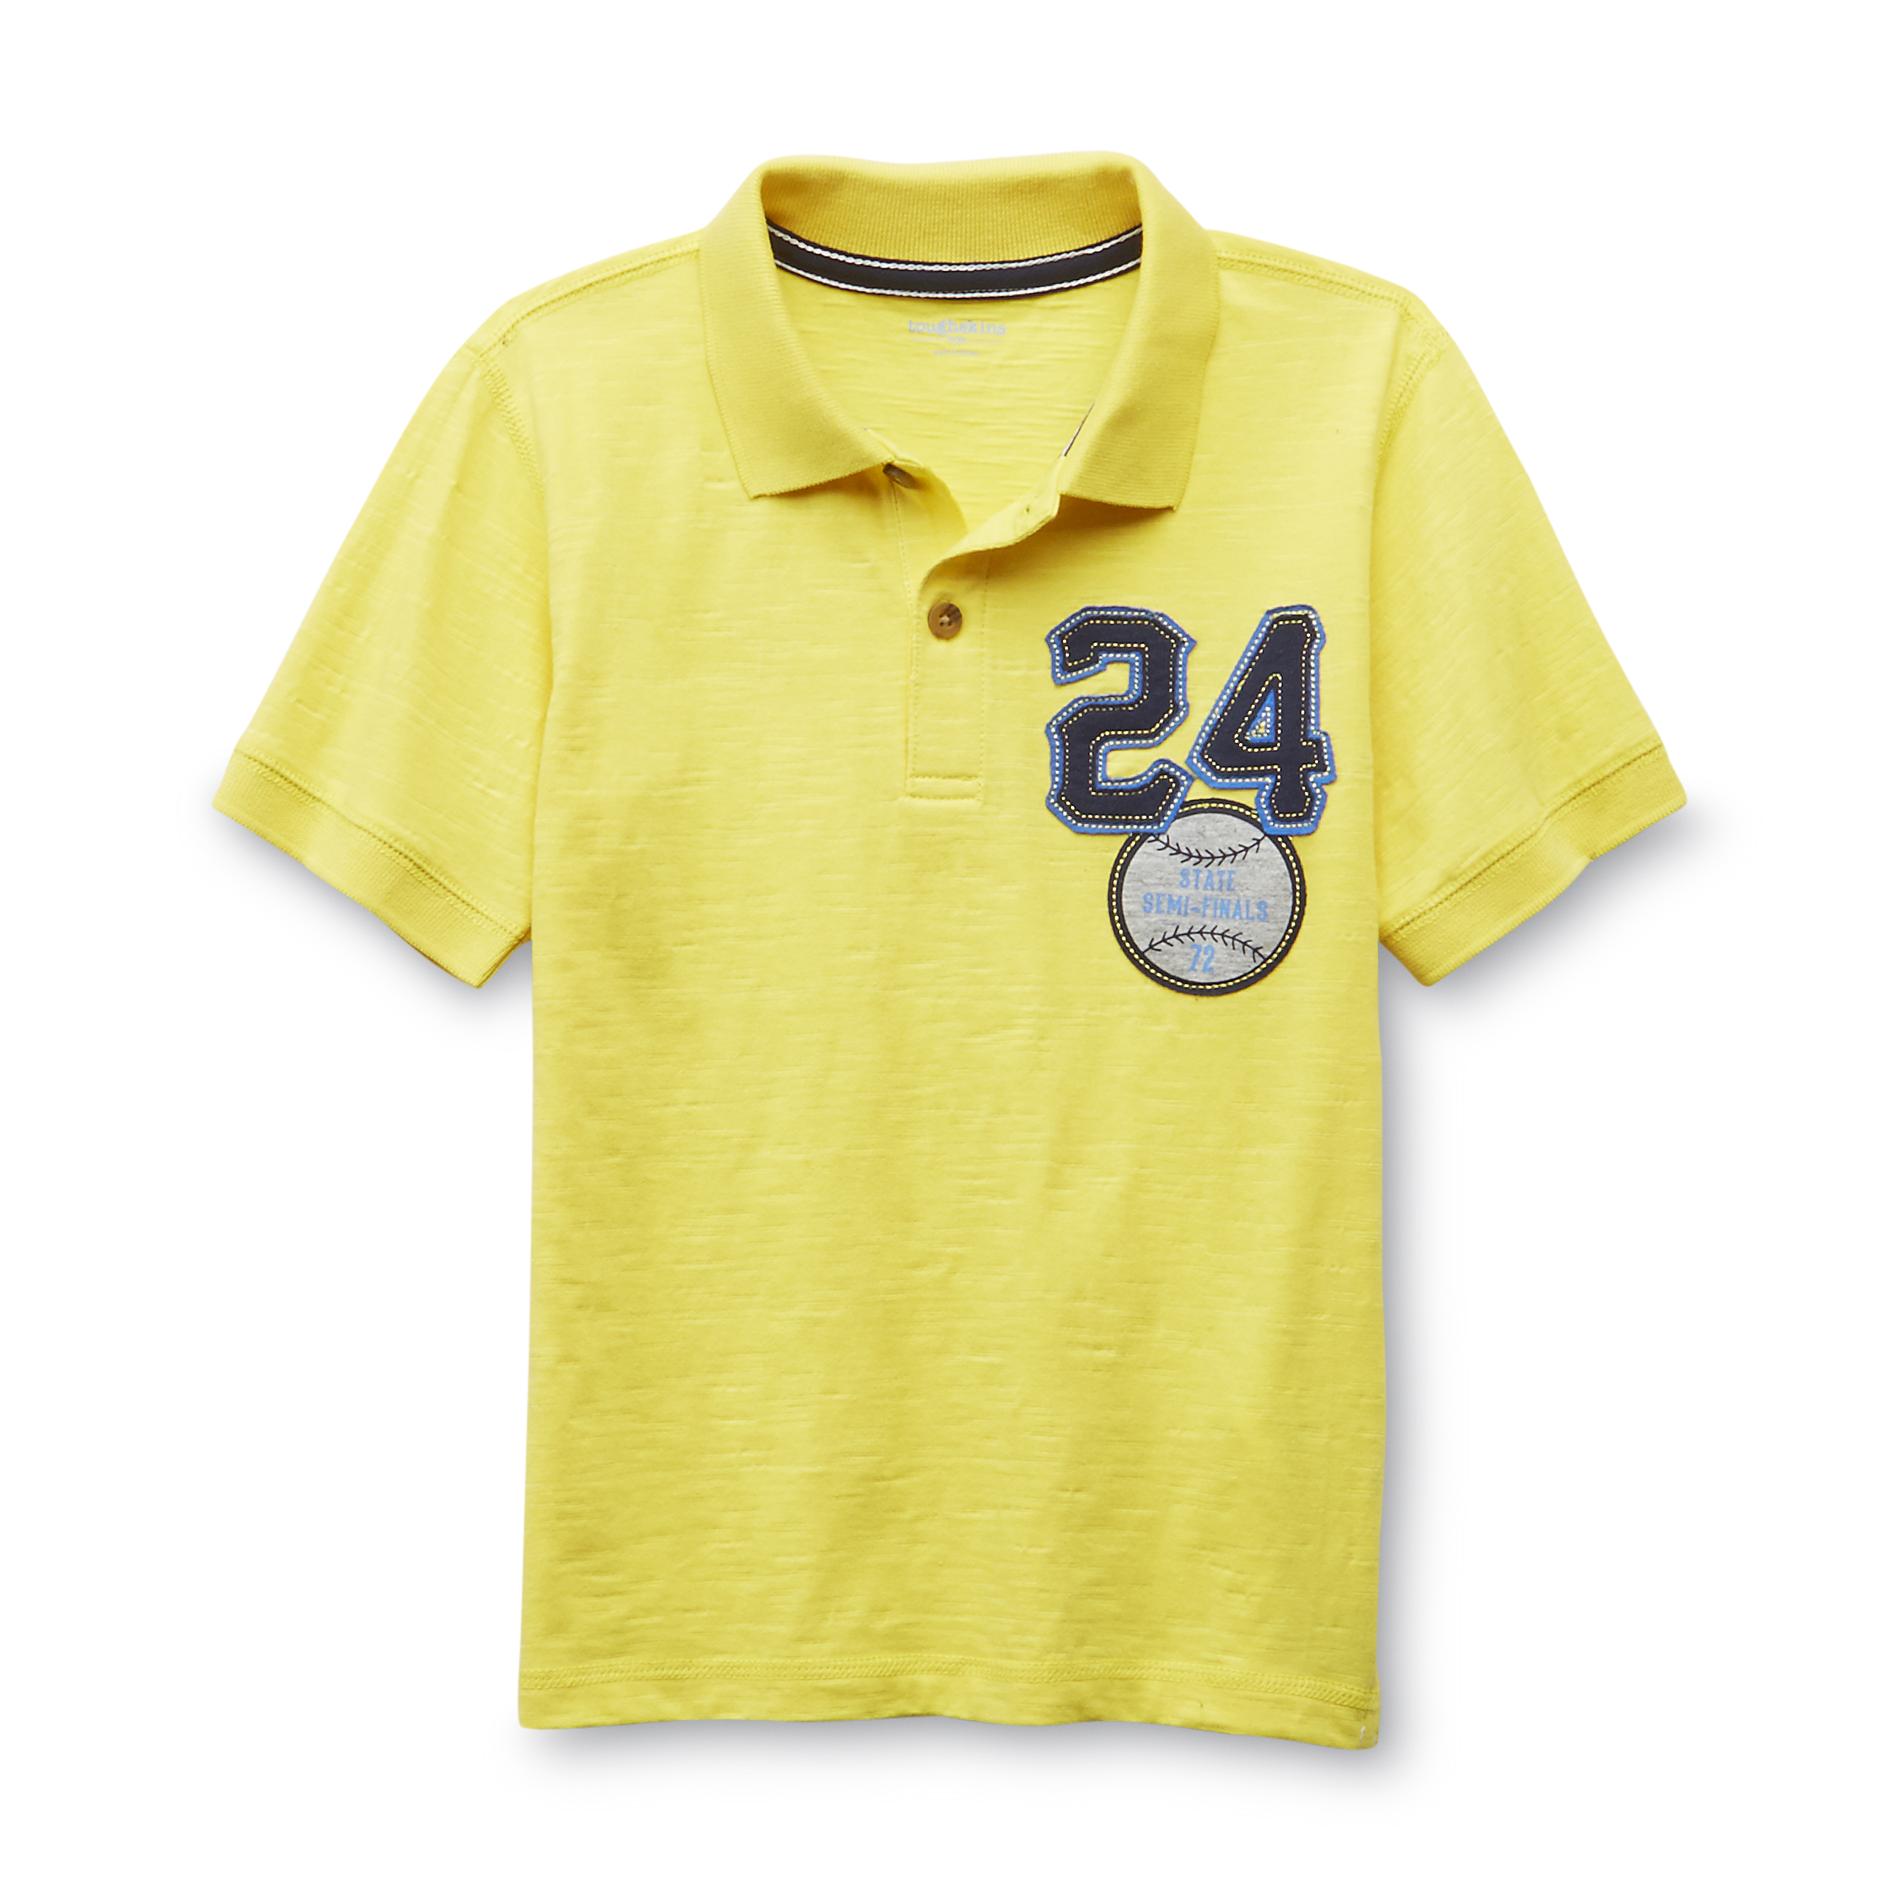 Toughskins Boy's Graphic Polo Shirt - Baseball